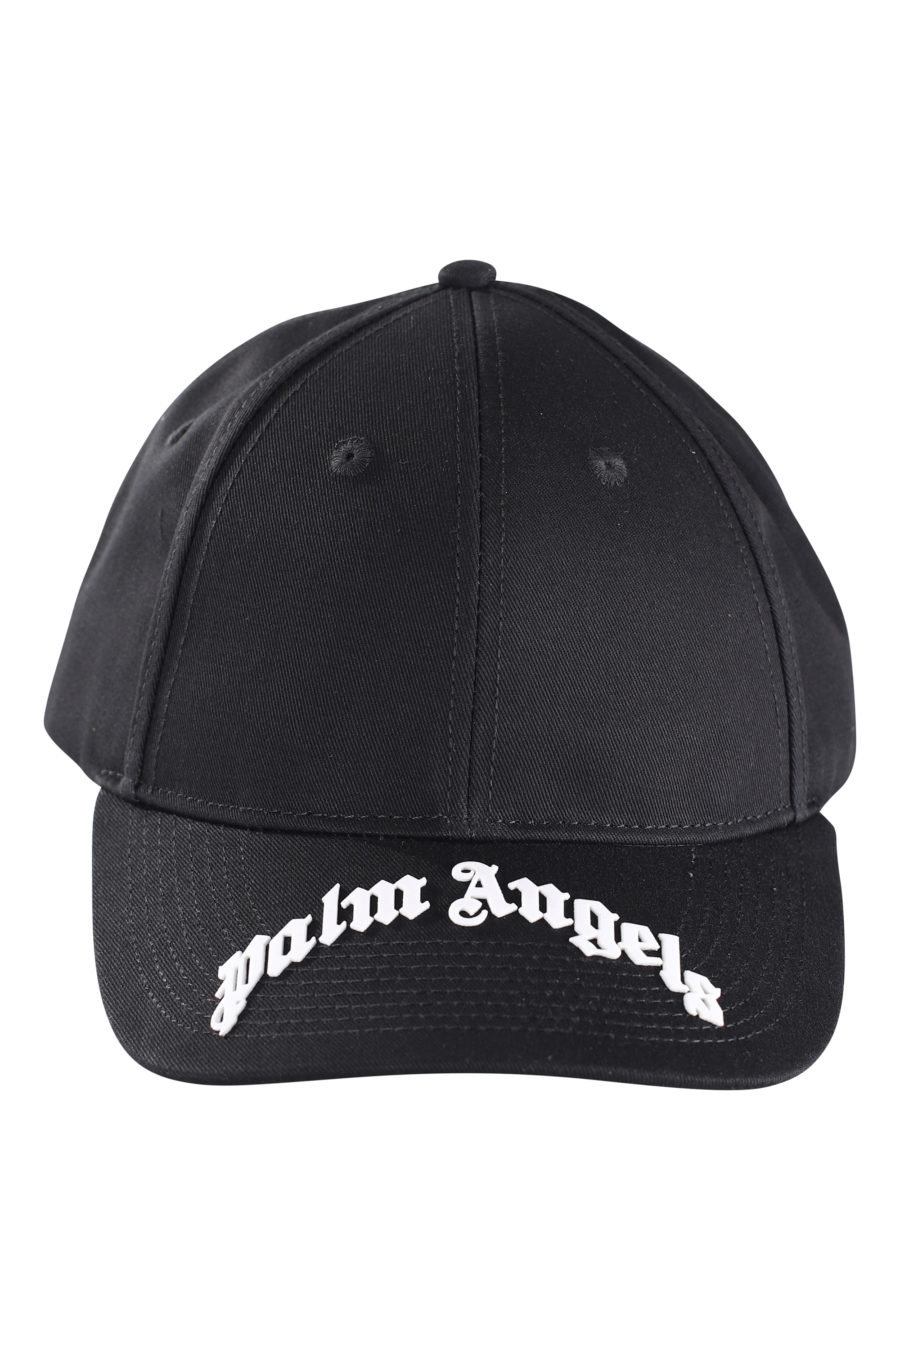 Gorra negra con logo en relieve en la visera - IMG 9616